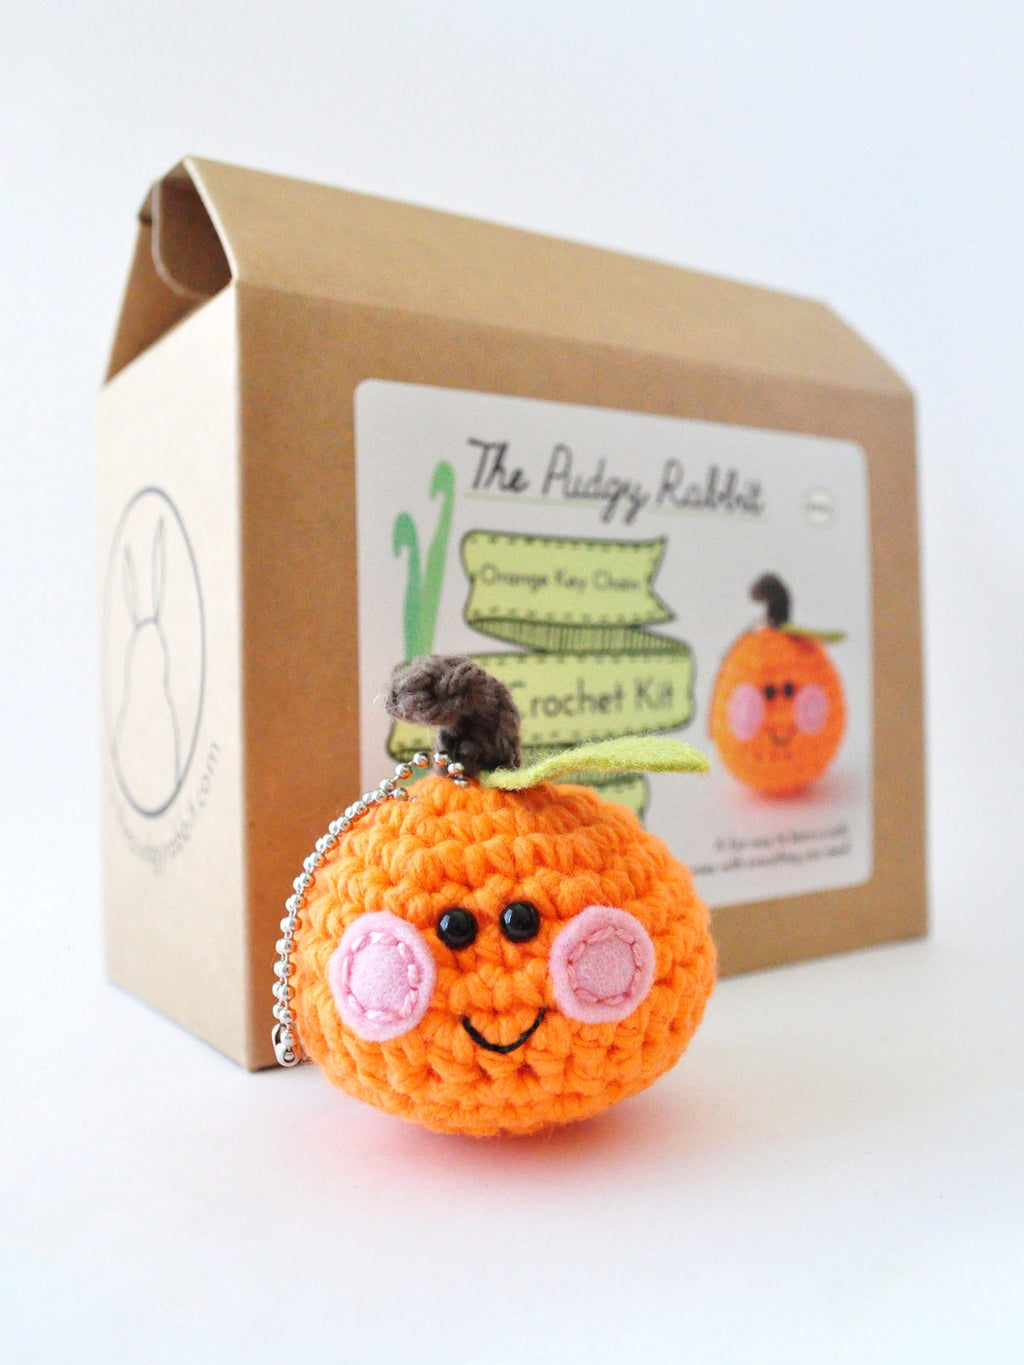 Orange keychain crochet kit